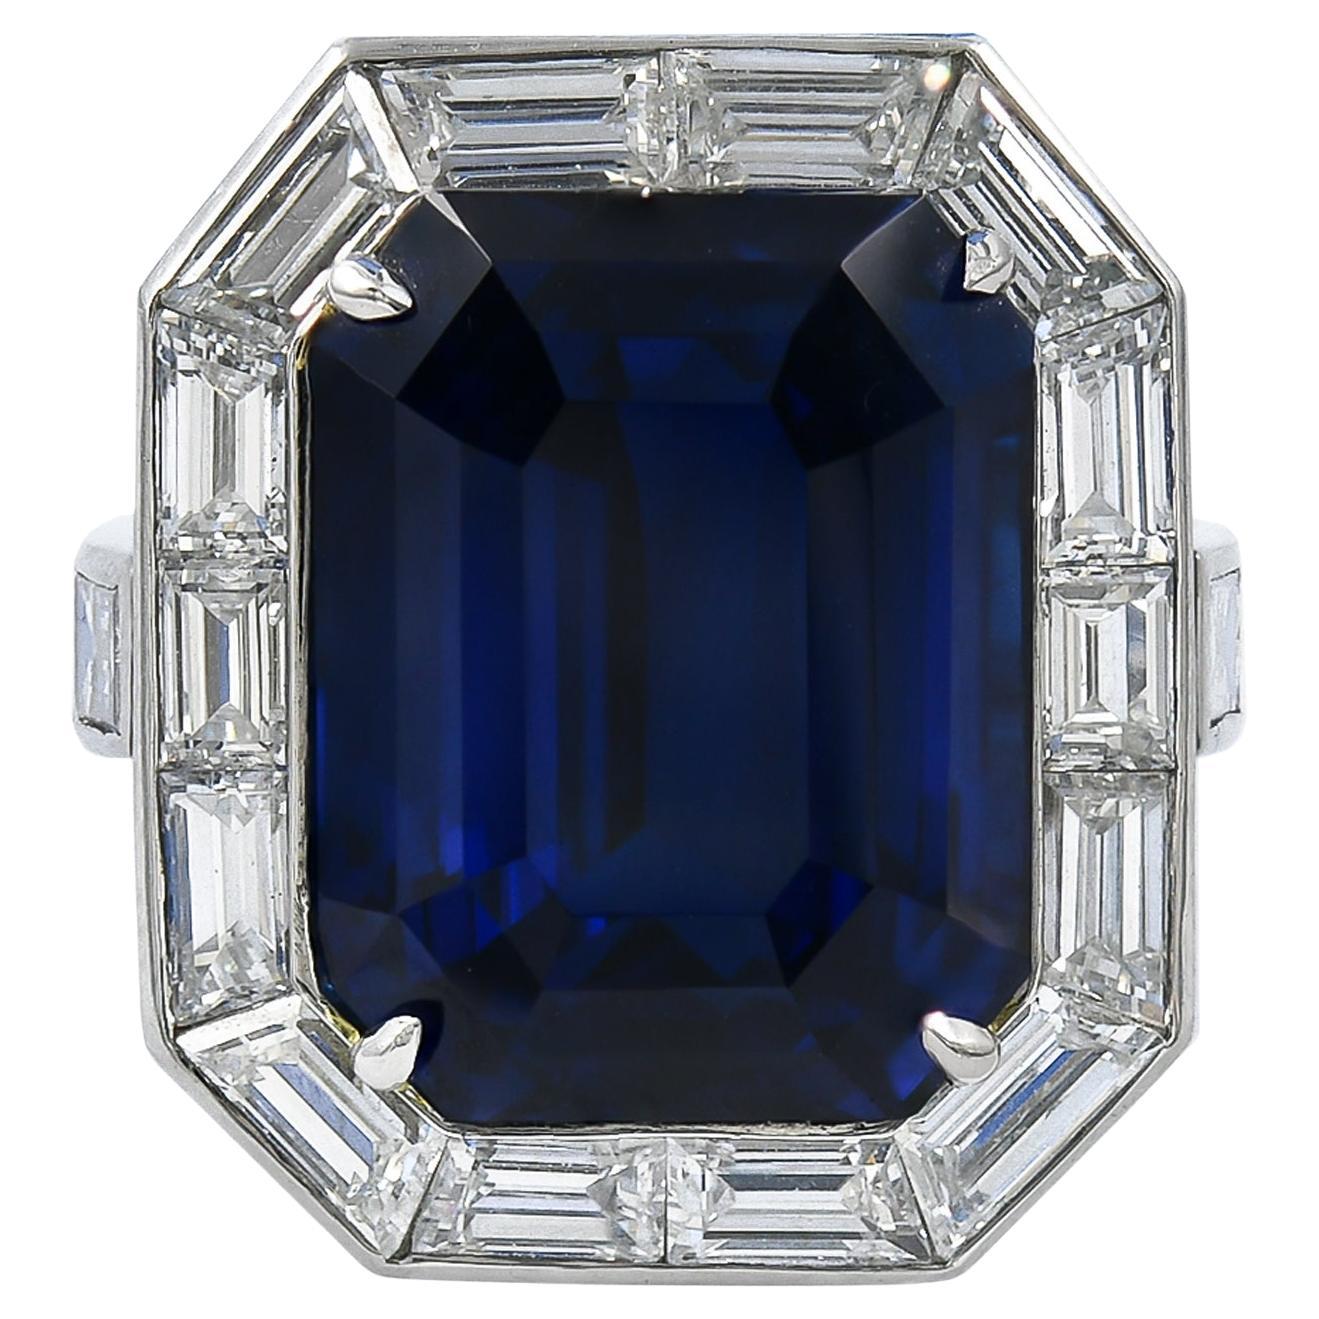 Spectra Fine Jewelry GRS Certified 20.12 Carat Blue Sapphire Diamond Ring For Sale